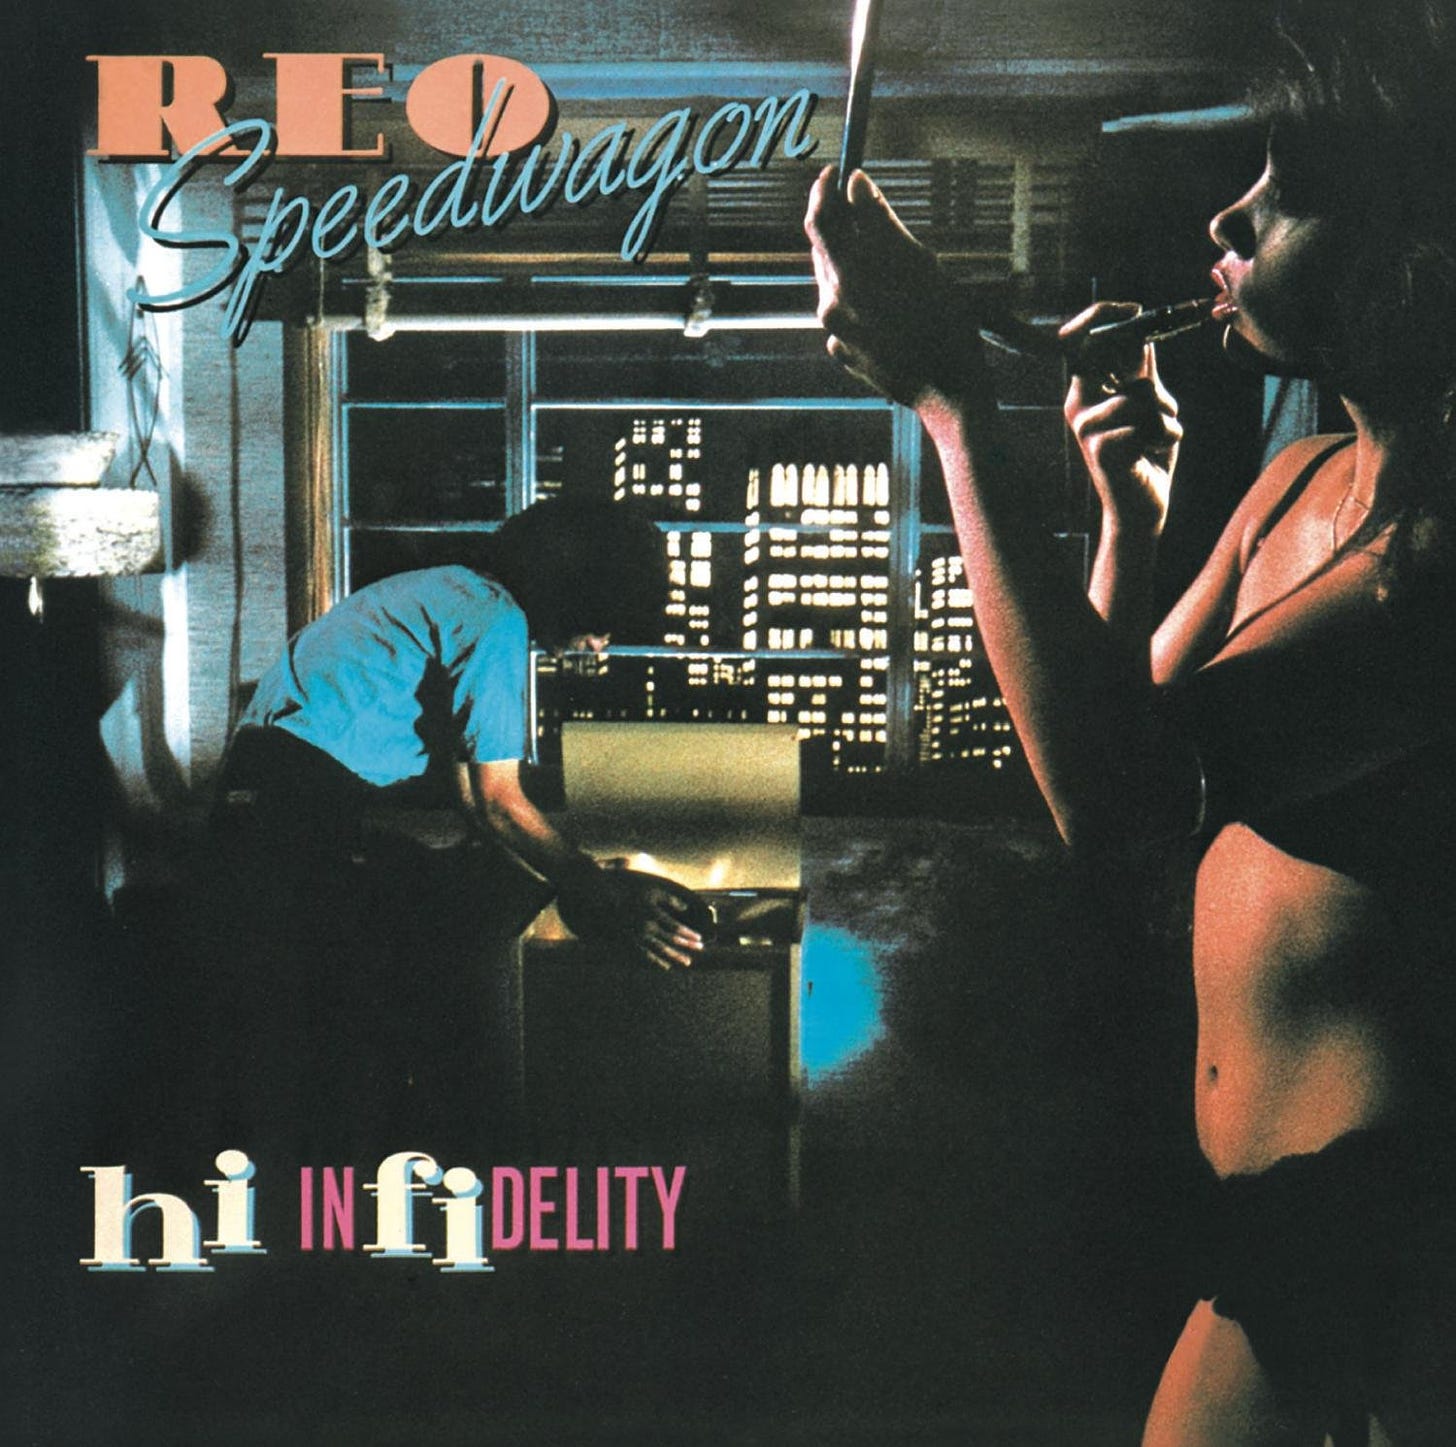 REO Speedwagon - Hi Infidelity (30th Anniversary Edition) - Amazon.com Music